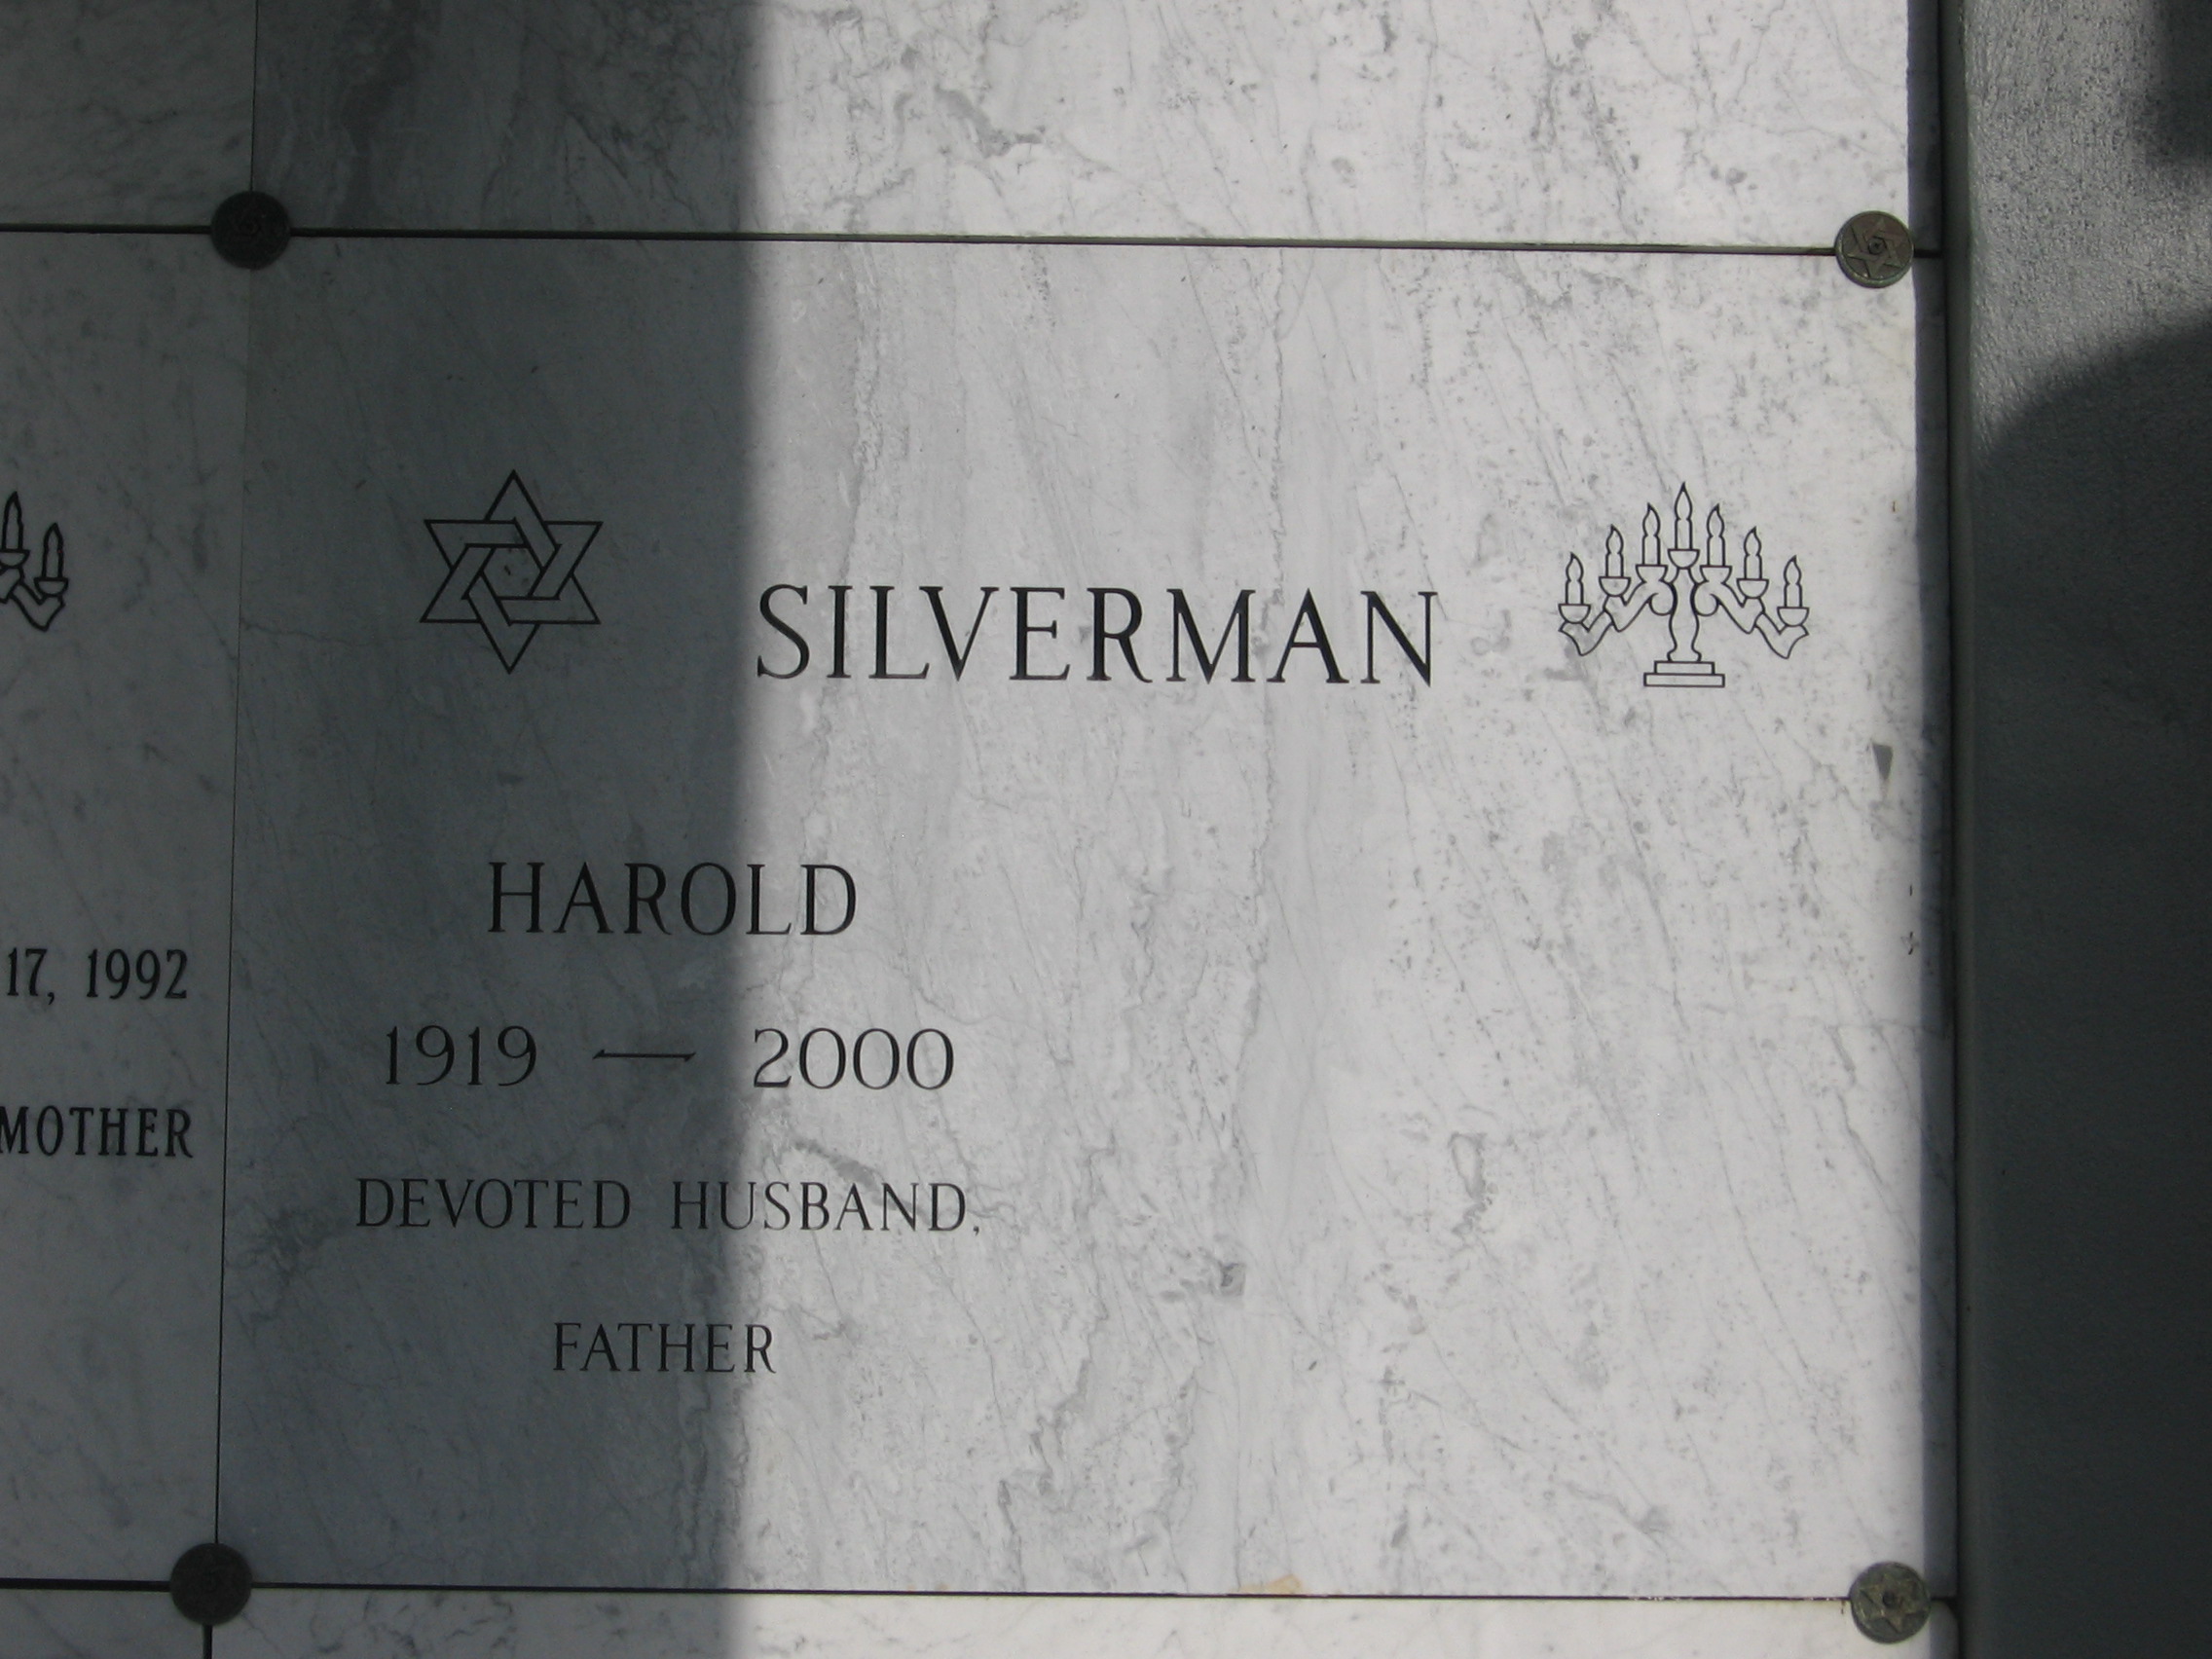 Harold Silverman